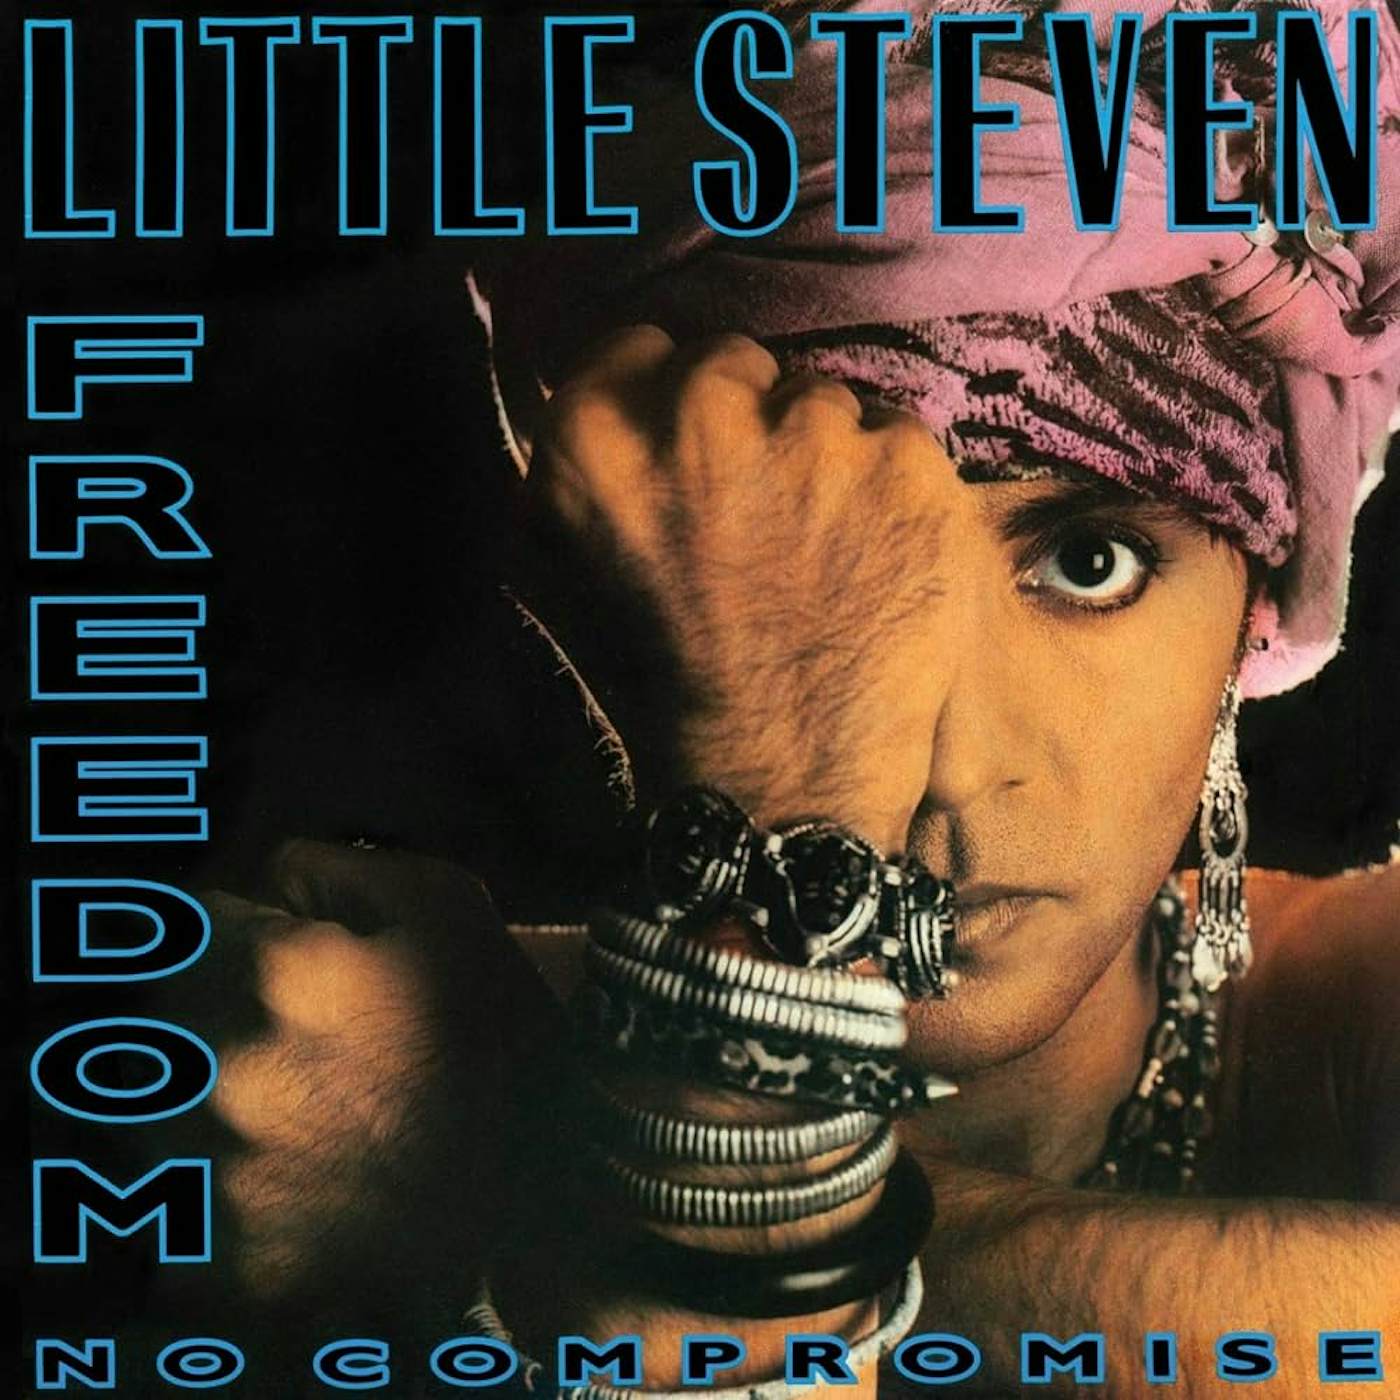 Little Steven FREEDOM: NO COMPROMISE Vinyl Record